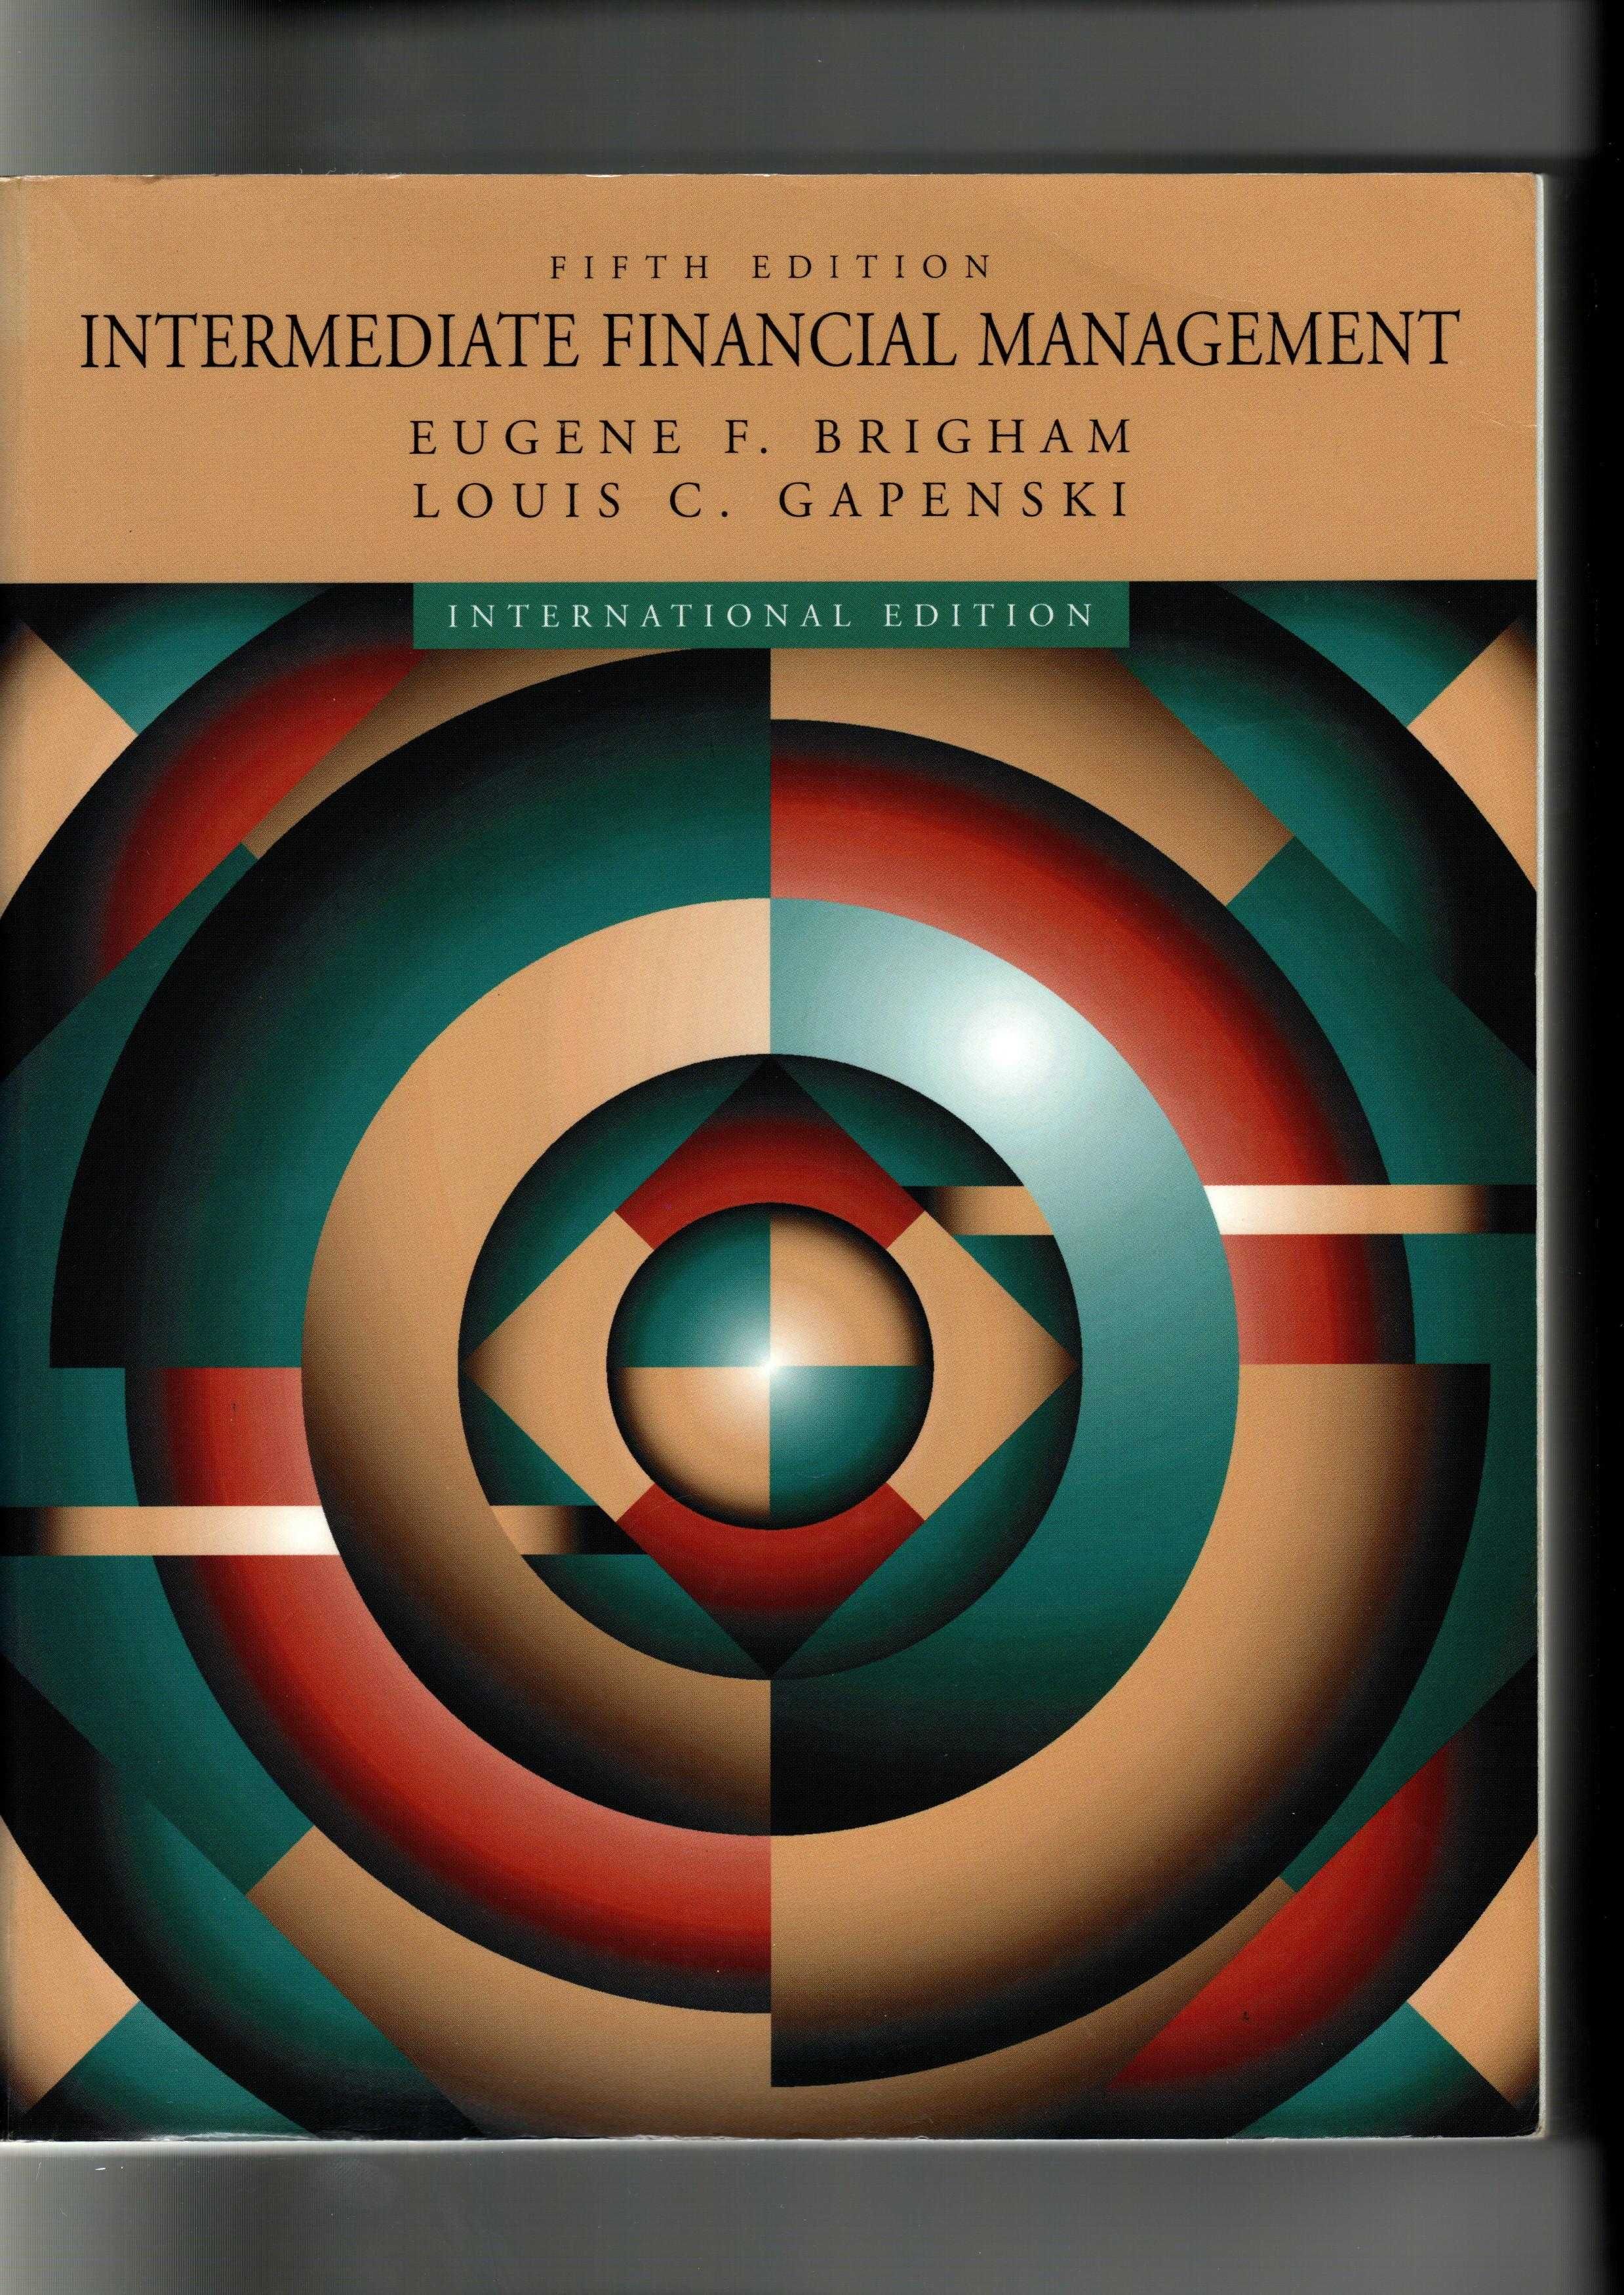 Livro "Intermediate Financial Management"